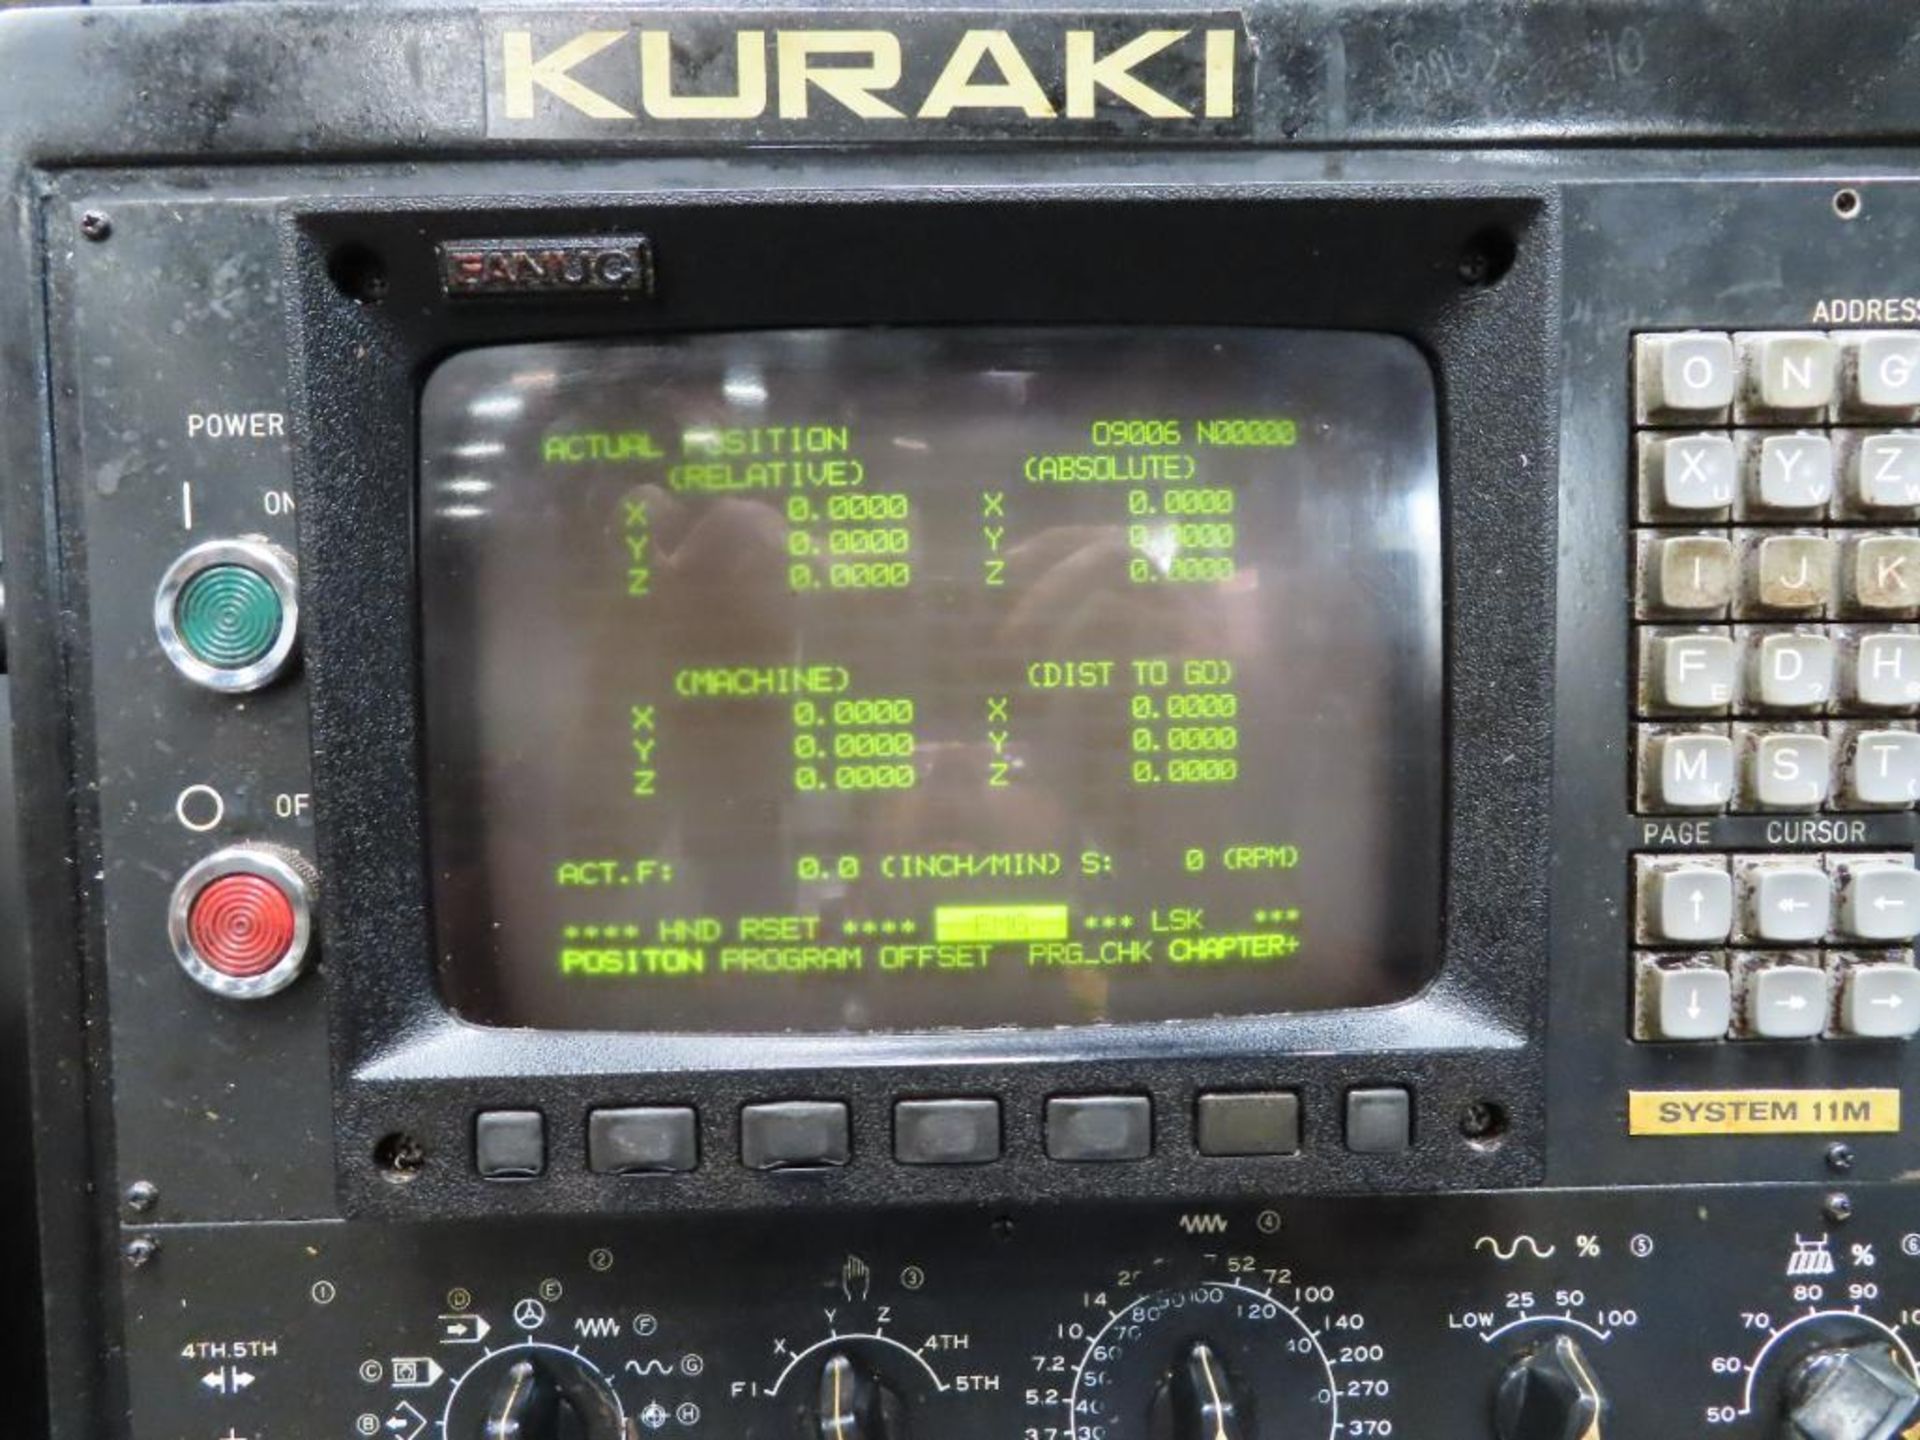 Kuraki Mdl.KV-1000 CNC Vertical Machining Center, (S/N:11371), (1985), Fanuc 11M Controls, Table Siz - Image 3 of 6